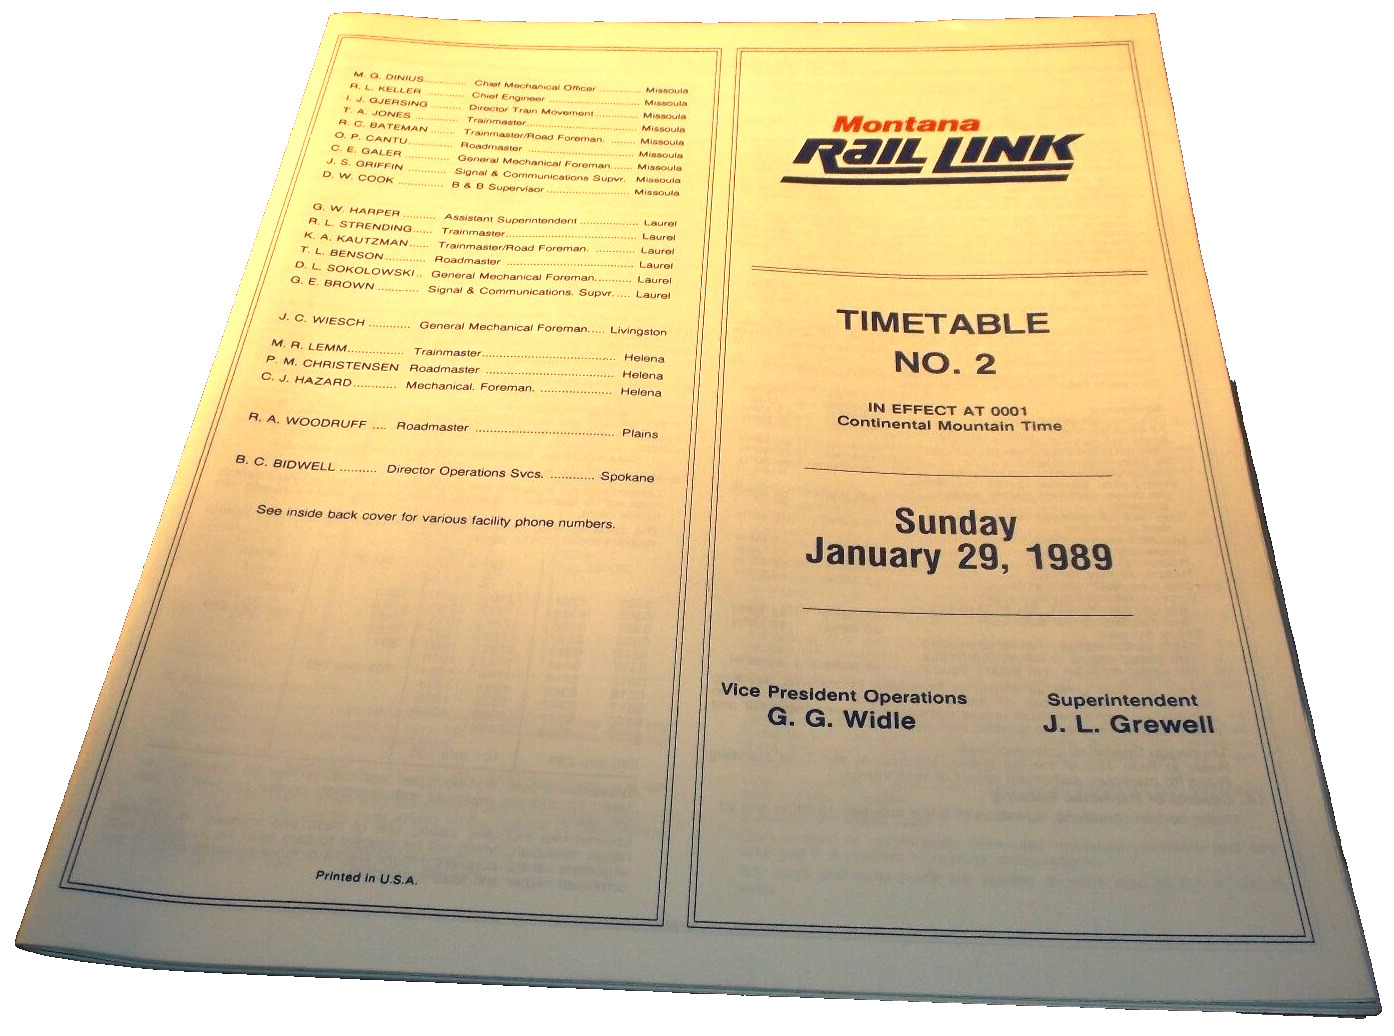 JANUARY 1989 MONTANA RAIL LINK SYSTEM EMPLOYEE TIMETABLE #2